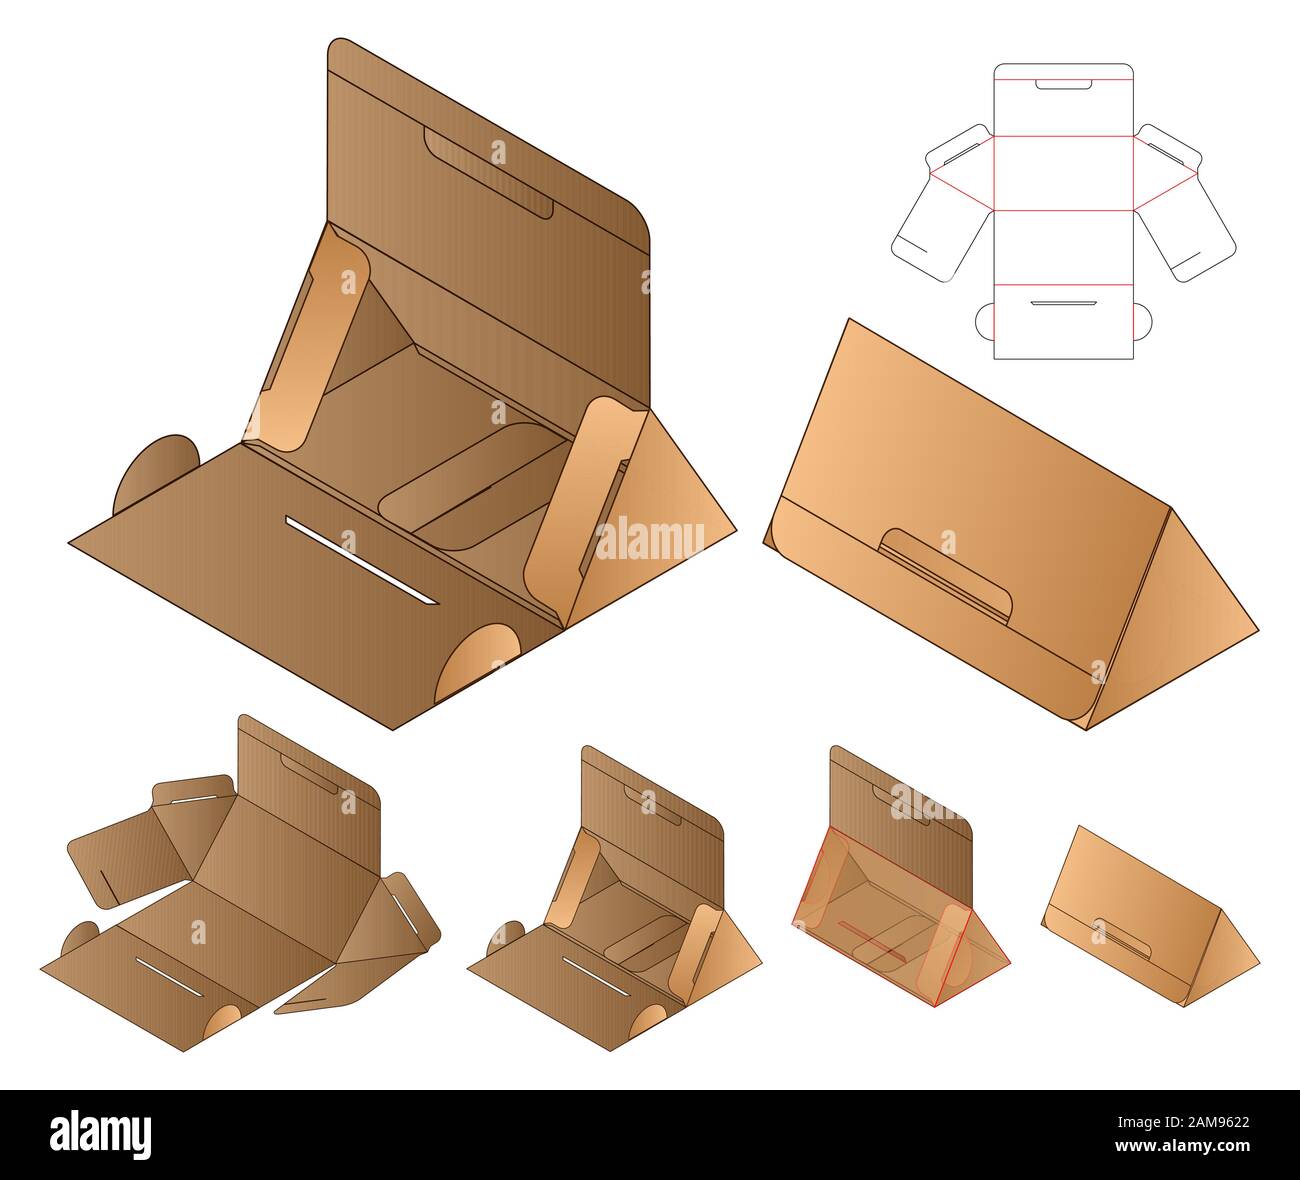 Caja triangular Imágenes recortadas de stock - Alamy